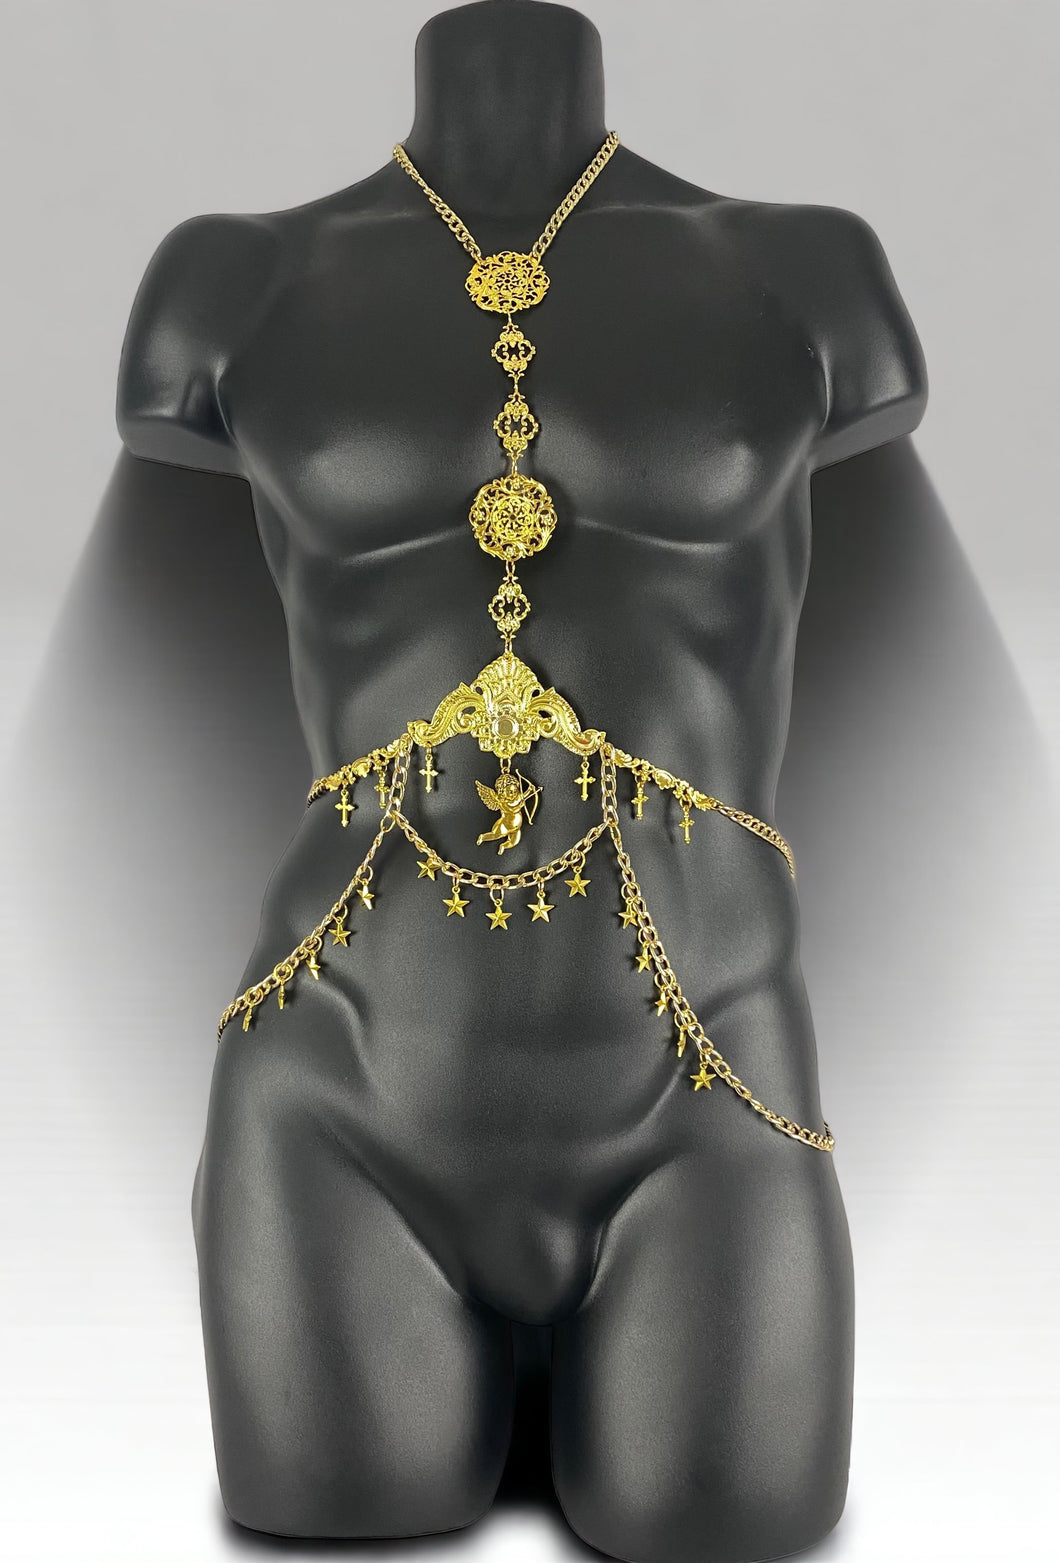 CARTHAGE - Gold Unisex God/Goddess Harness